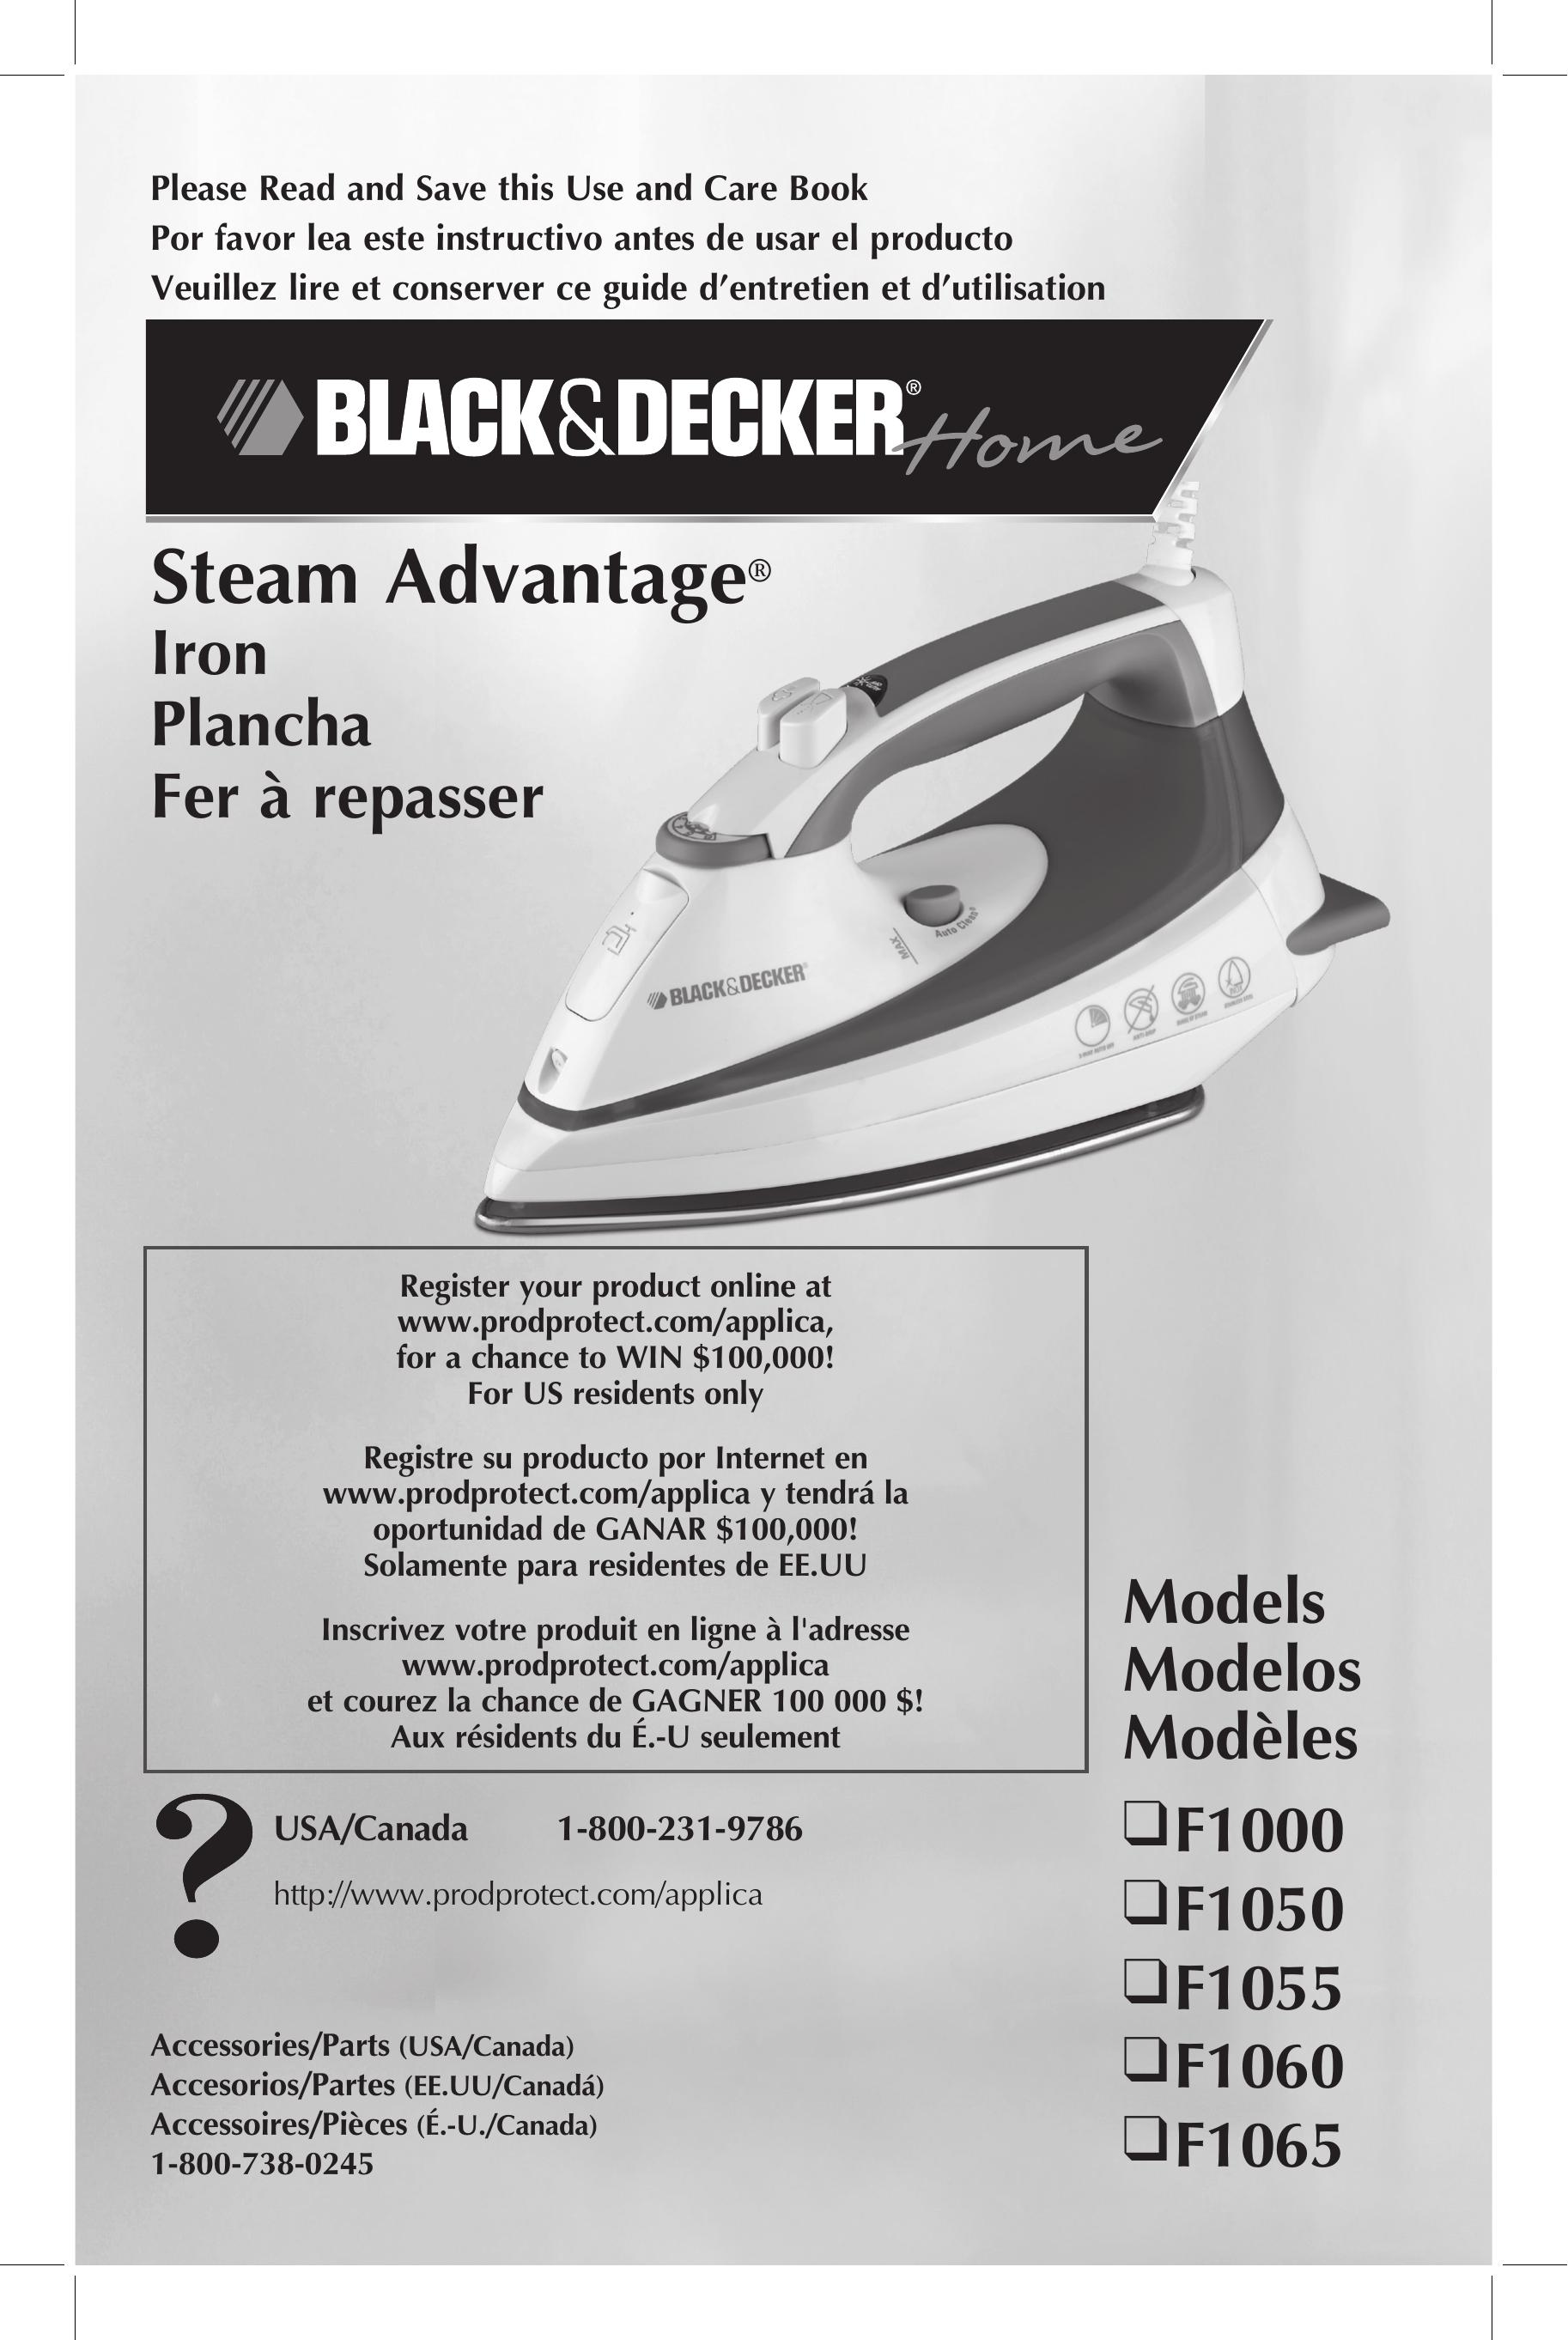 Black & Decker F1065 Iron User Manual